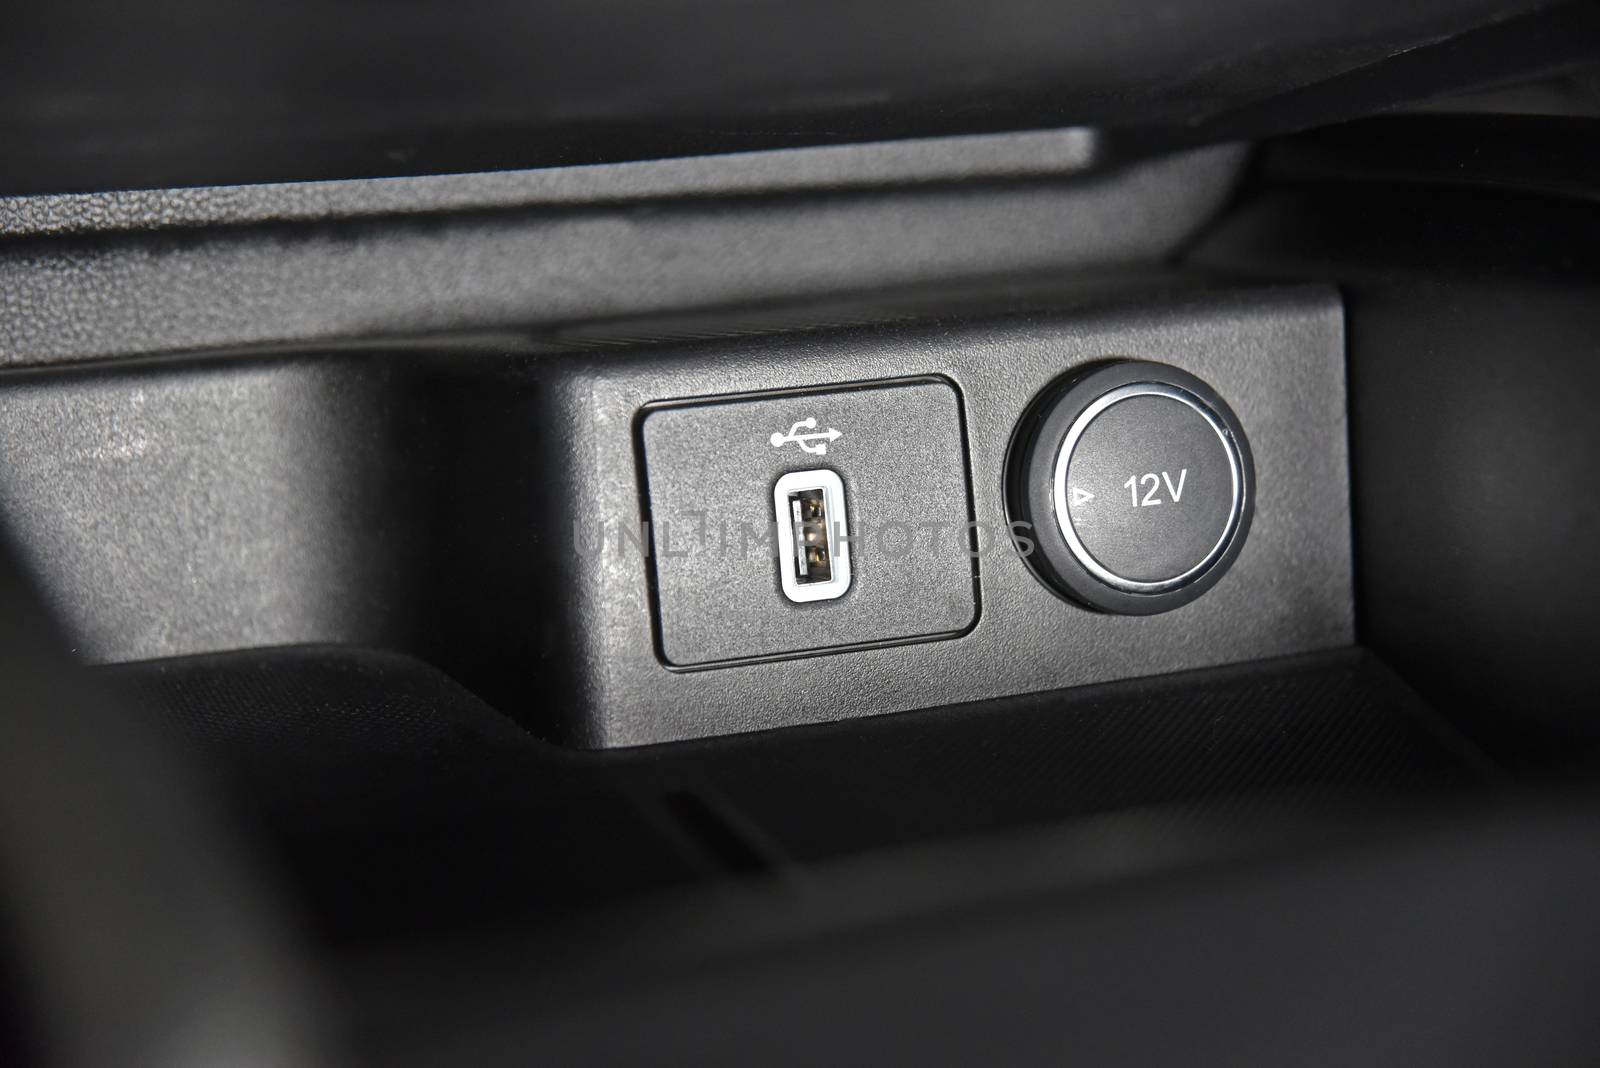 12V socket, wireless mobile phone charger, USB port, AUX port on car dashboard